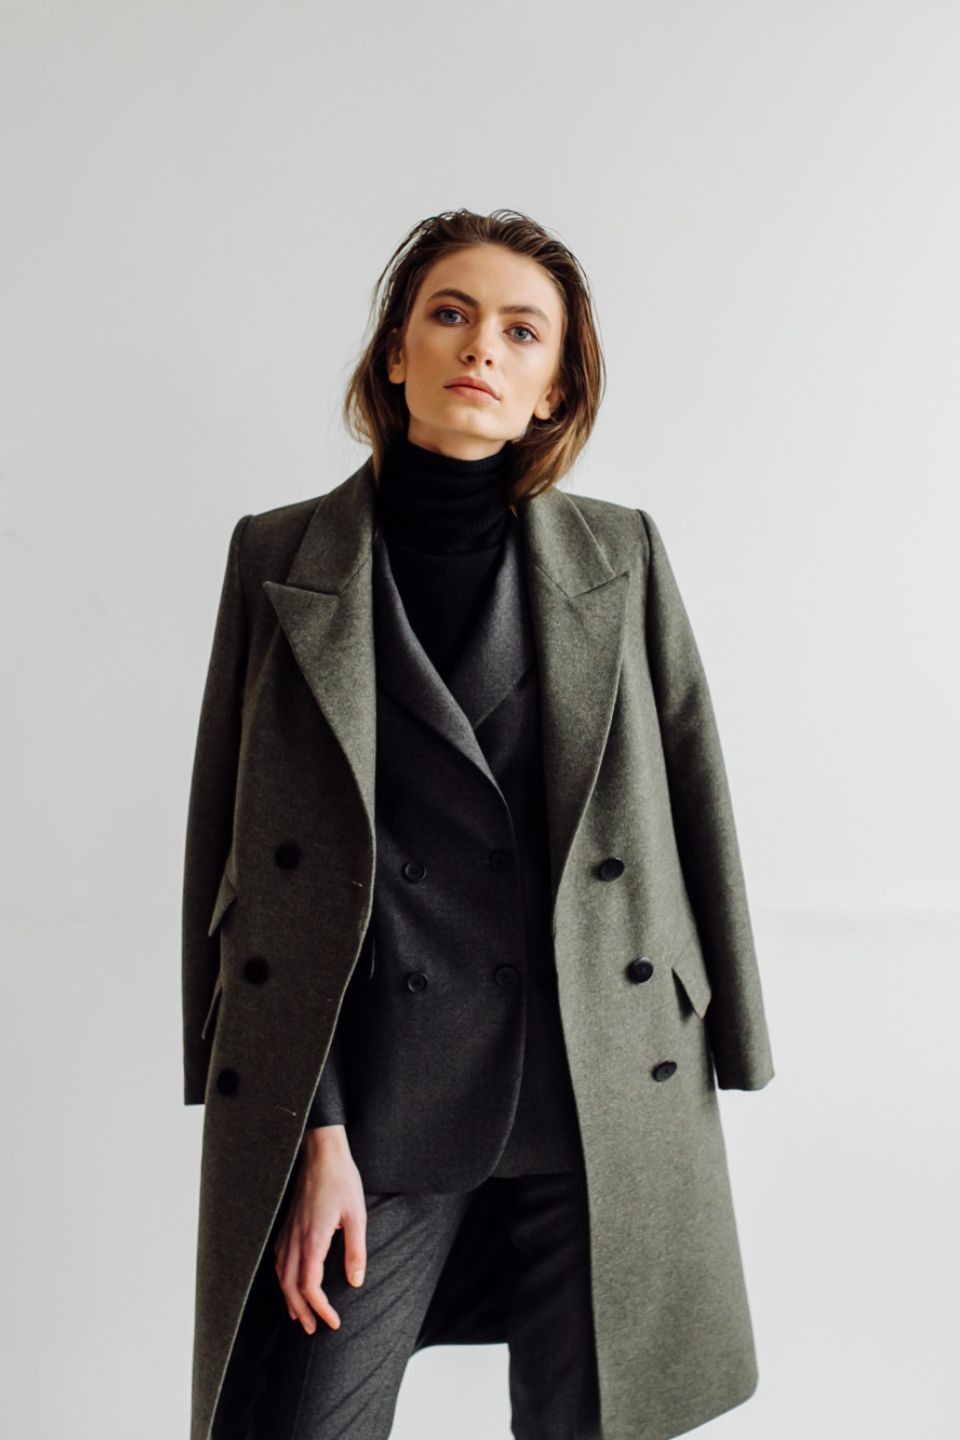 Women's Wool-Blend Double-Breasted Tailored Topcoat, Women's Coats &  Jackets